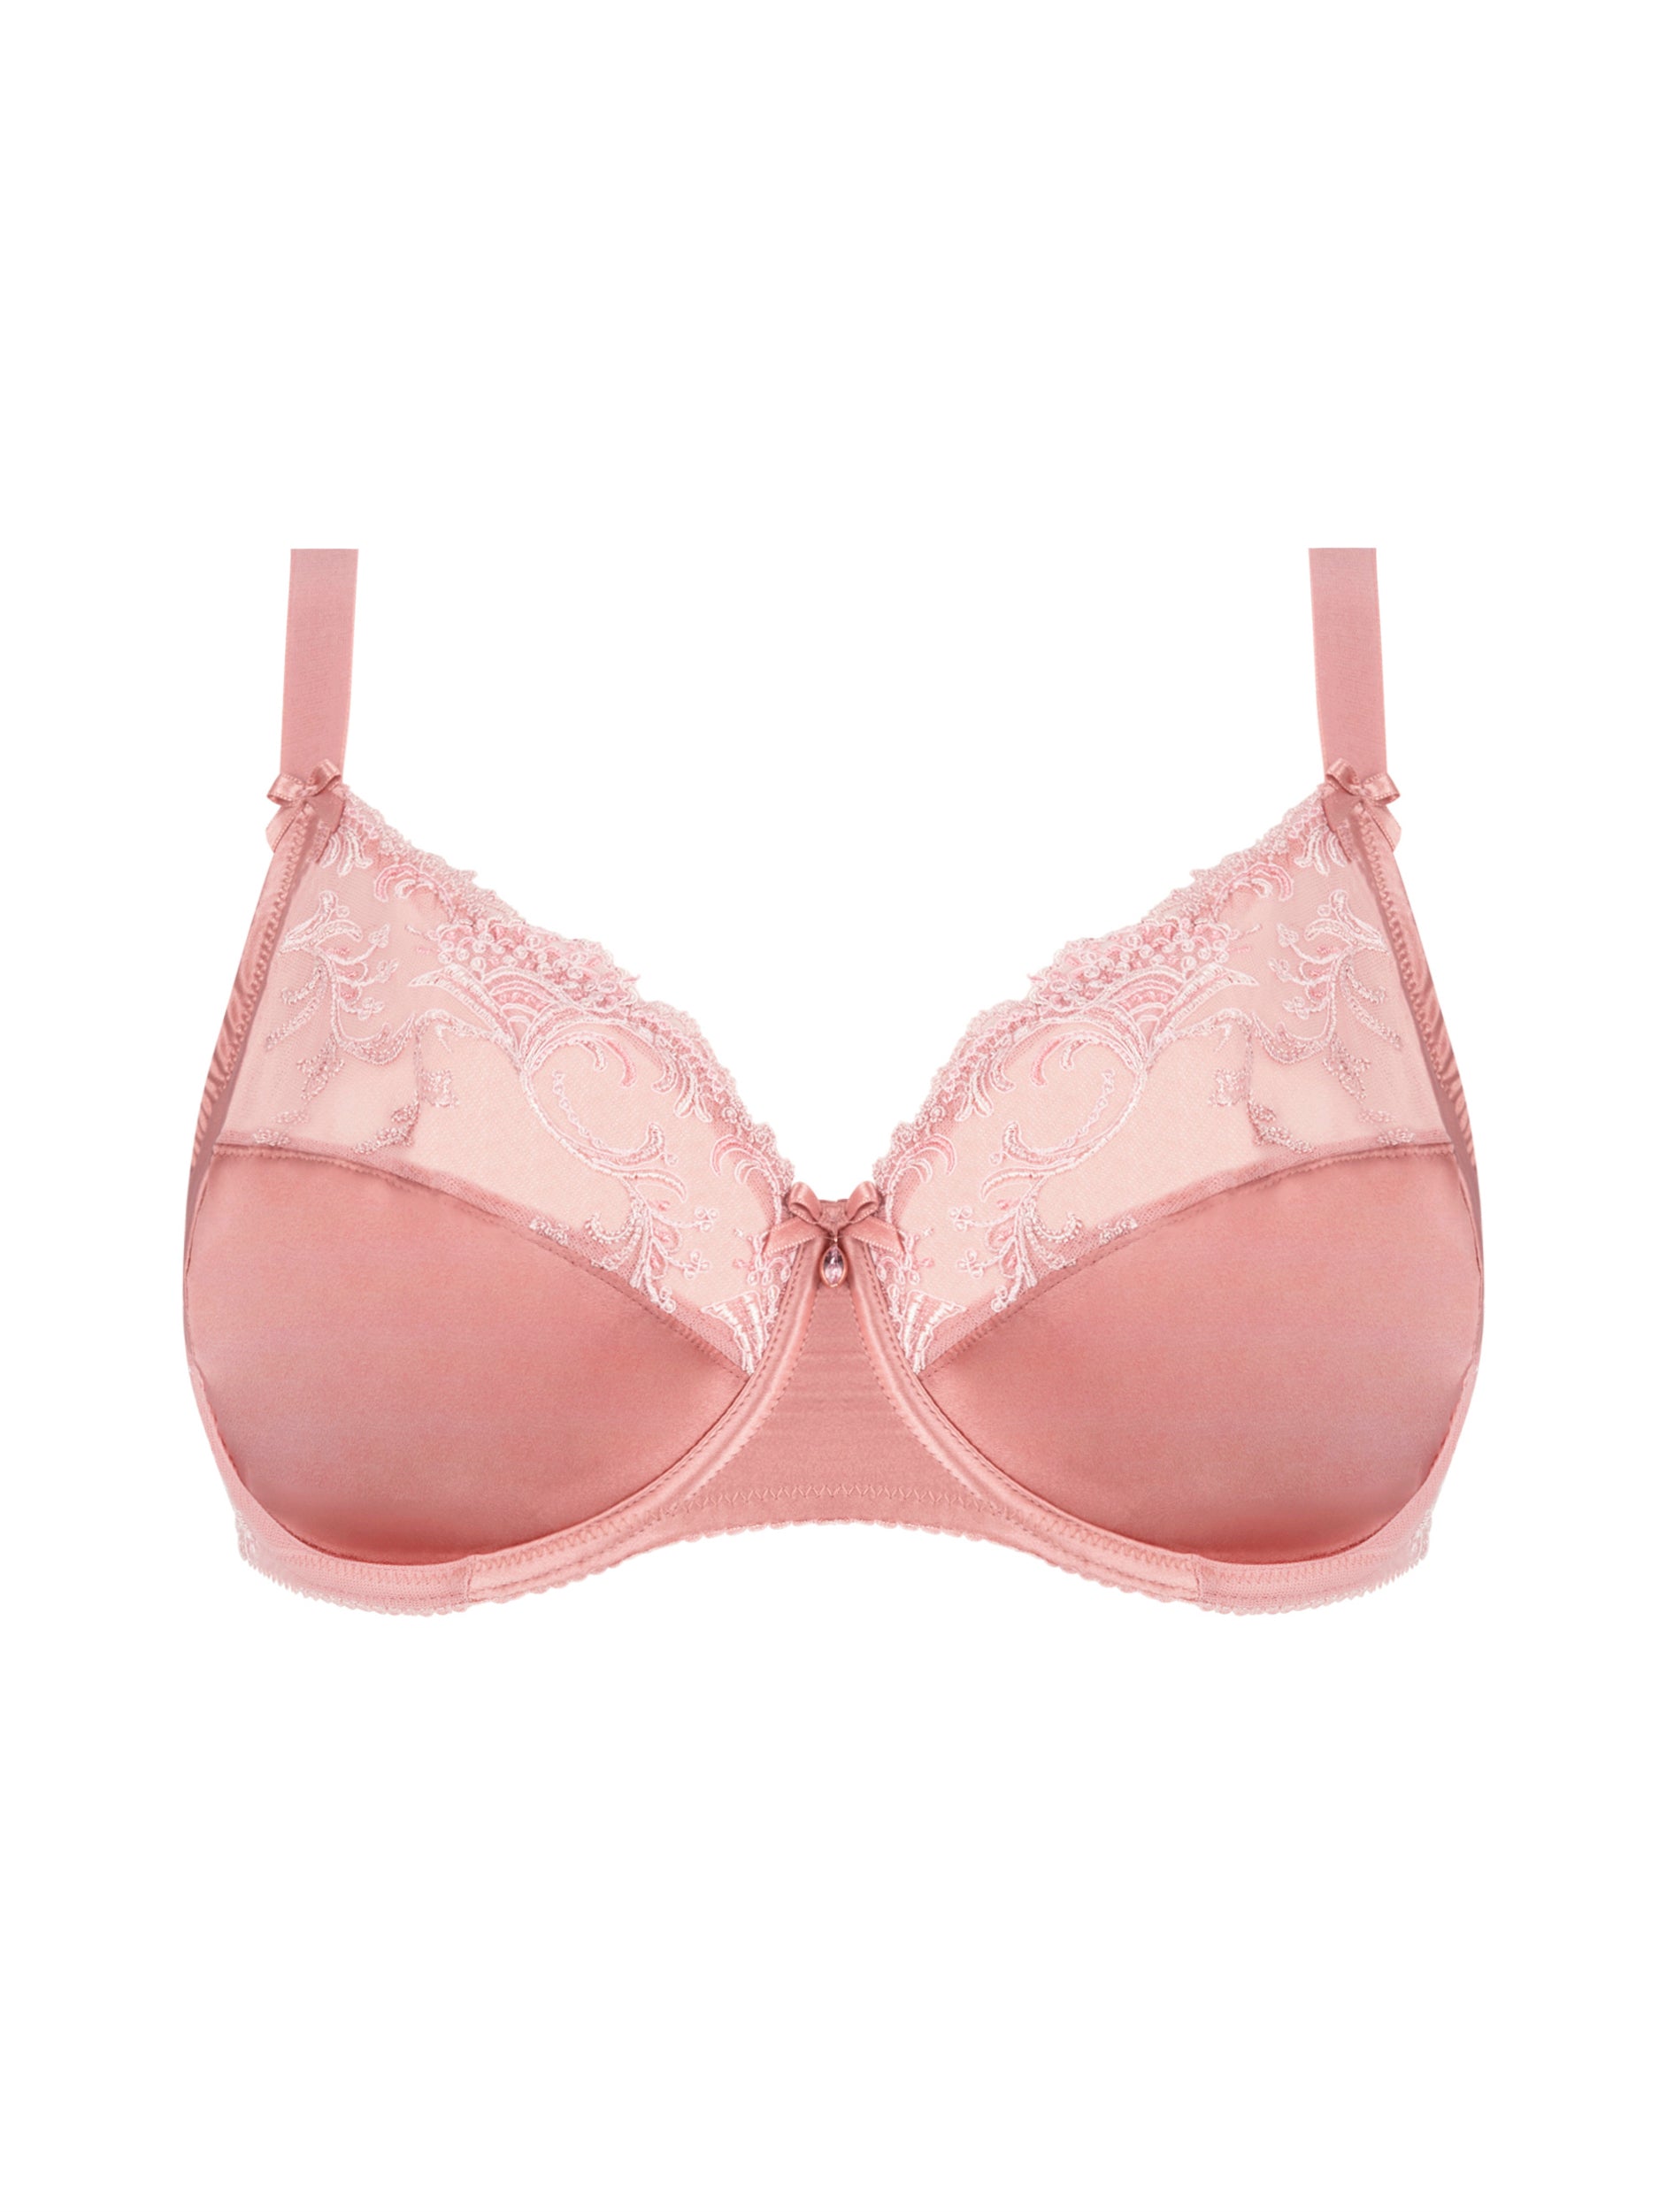 Buy Pink Bras for Women by SOIE Online